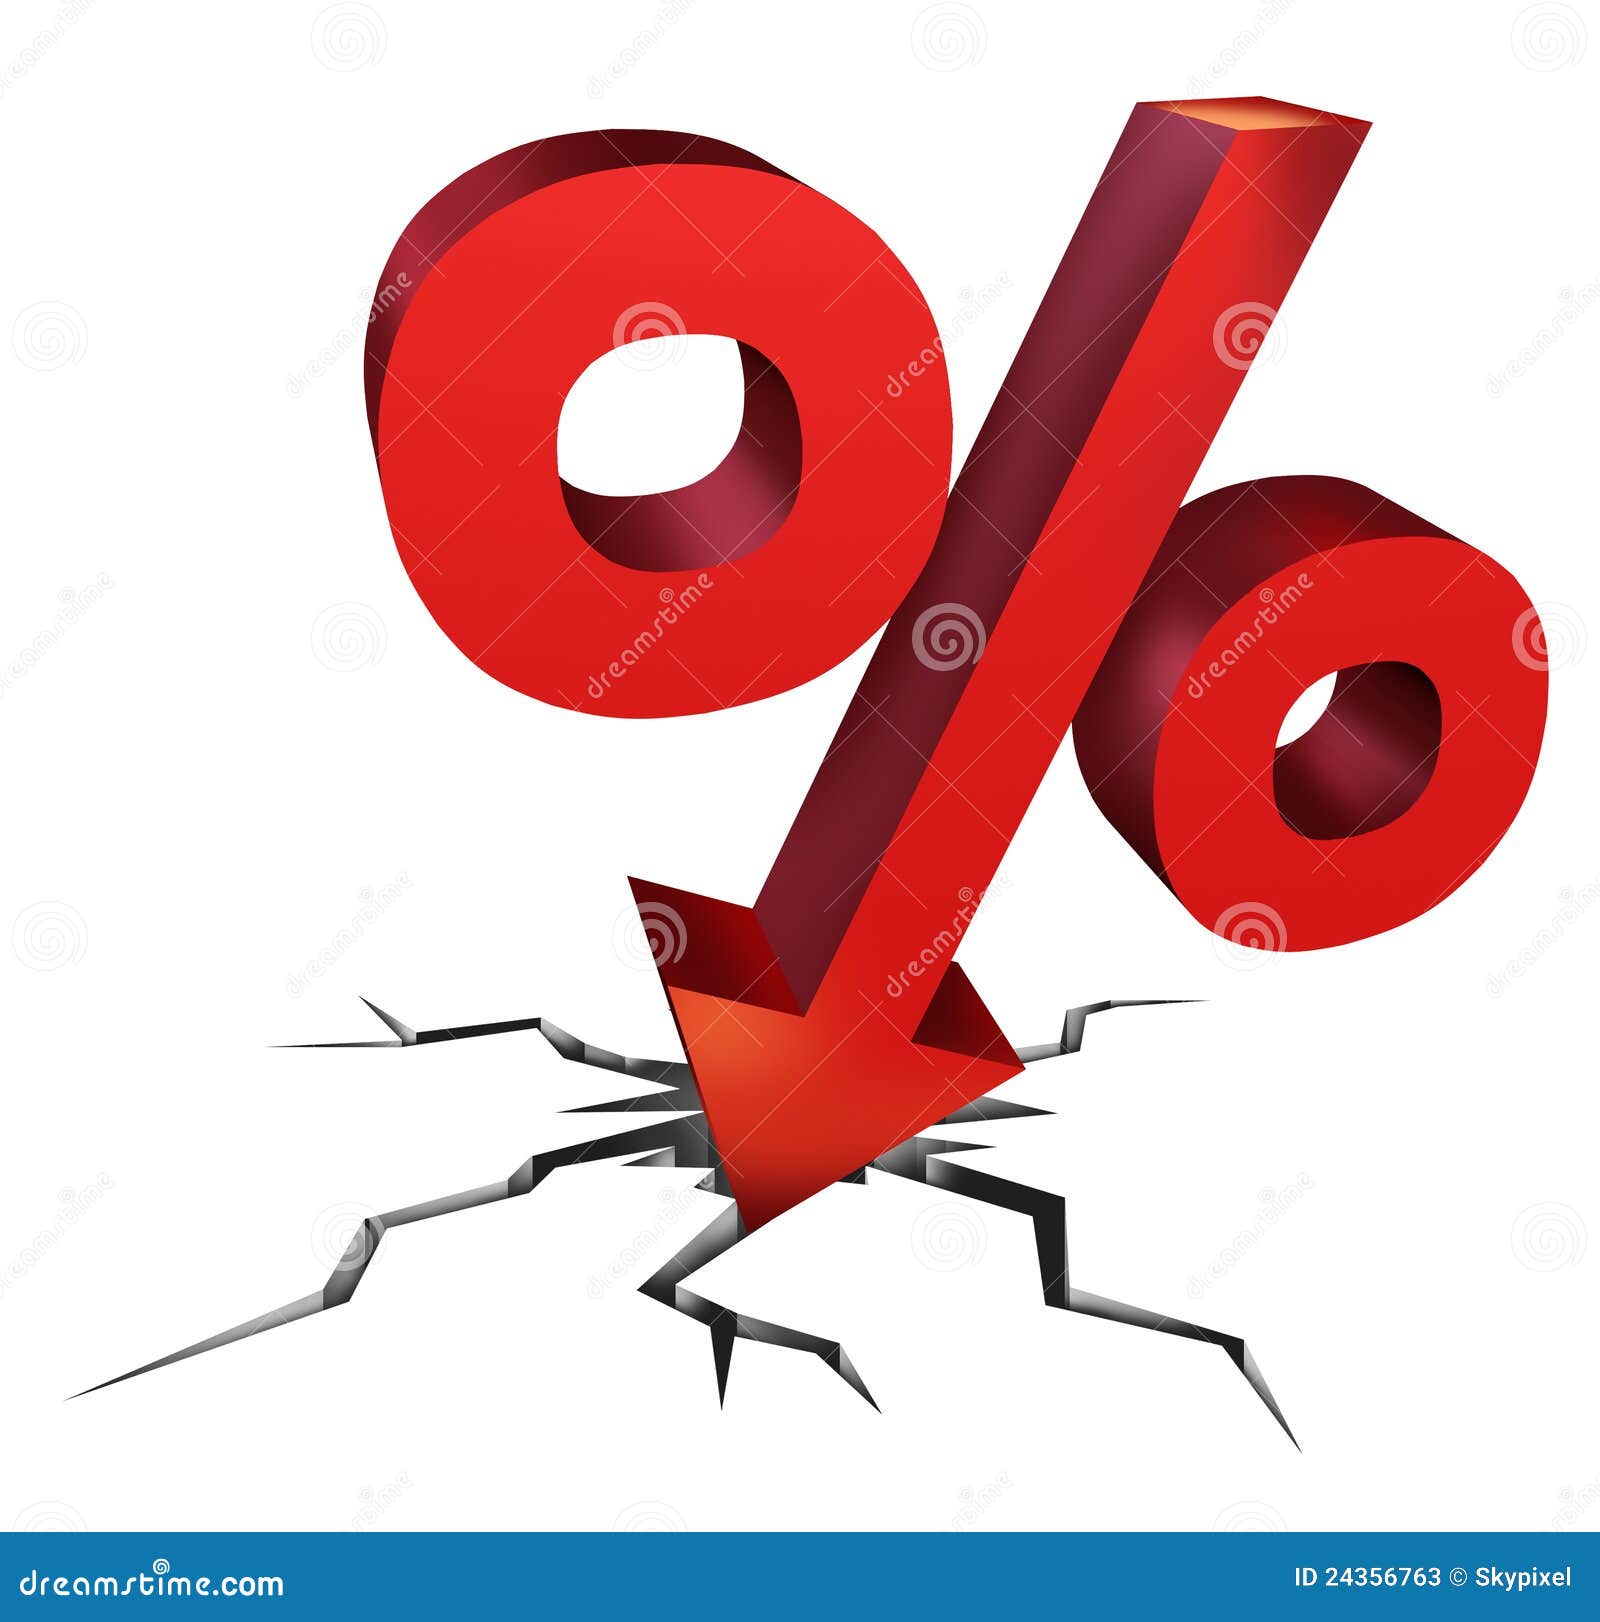 falling interest rates